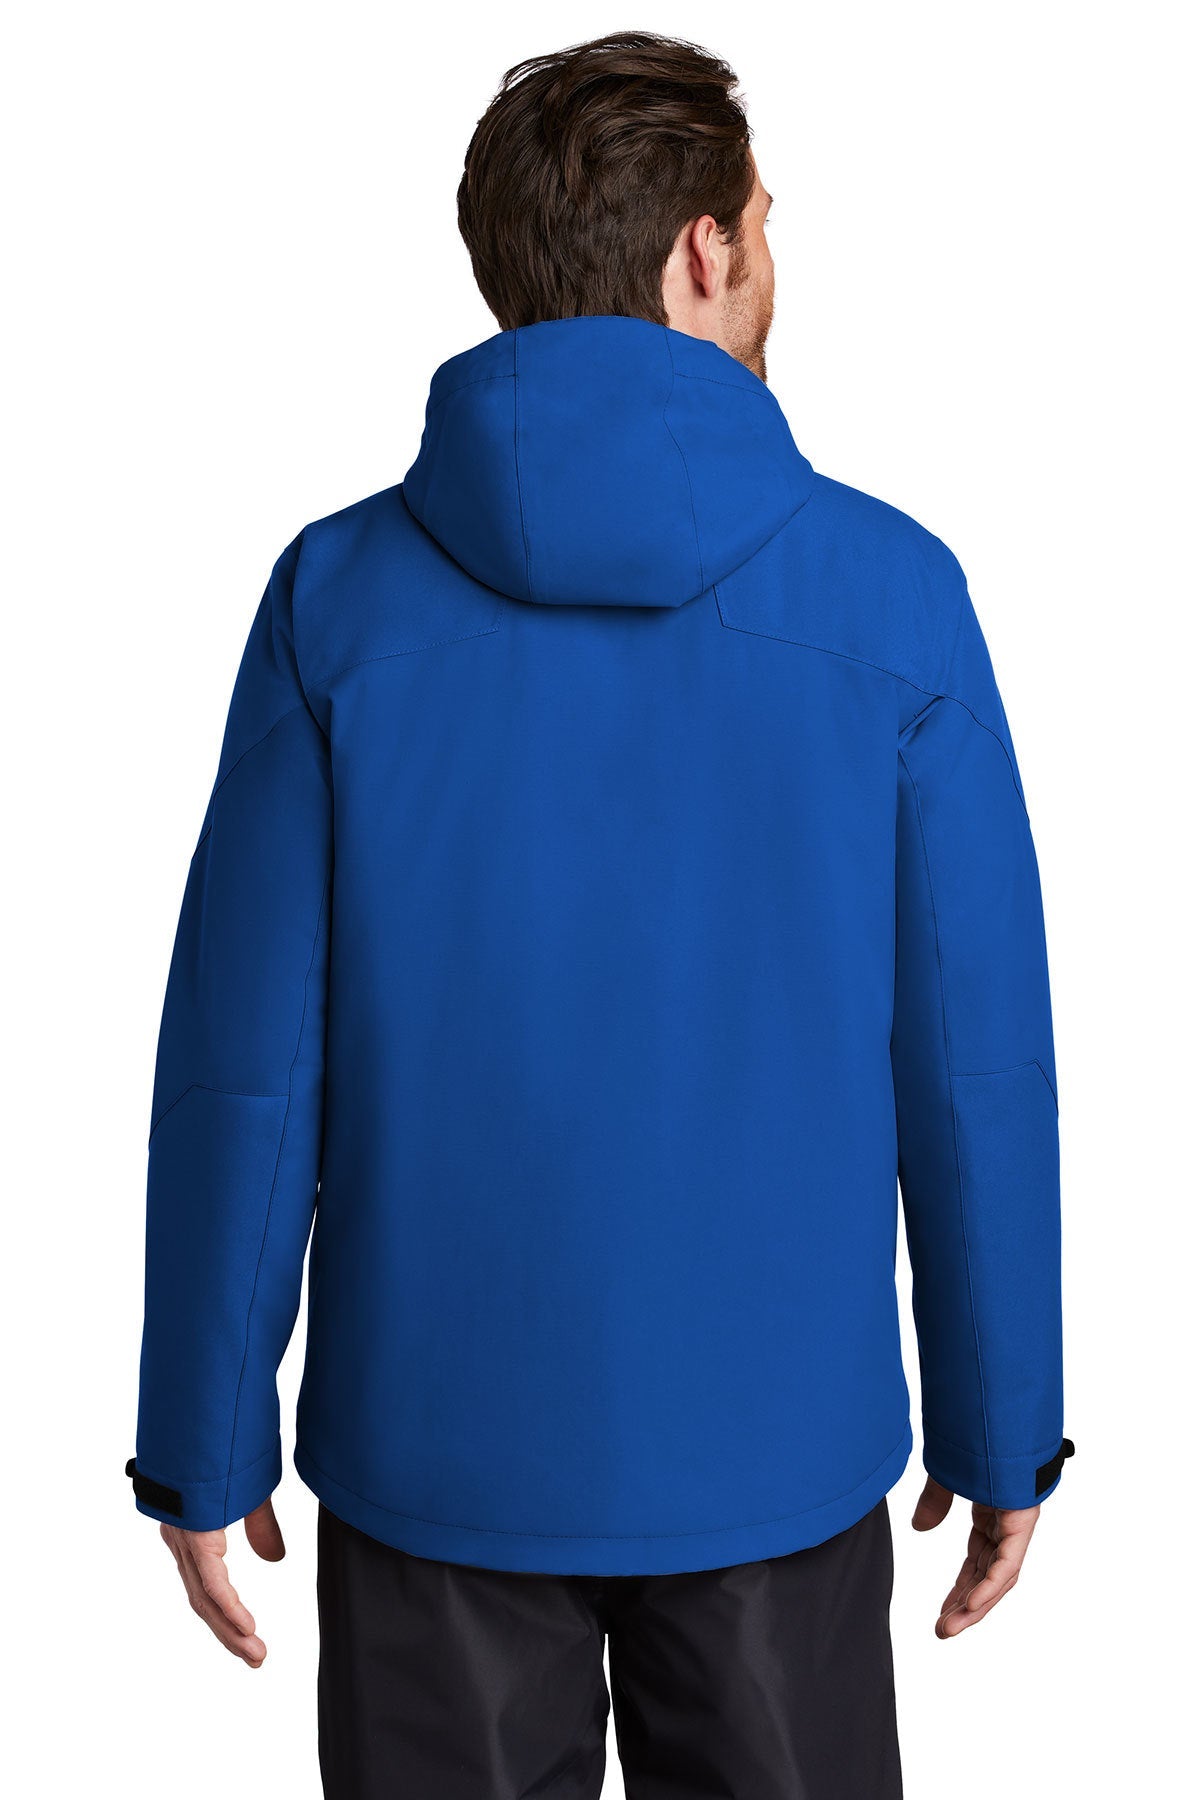 port authority_j405 _cobalt blue_company_logo_jackets